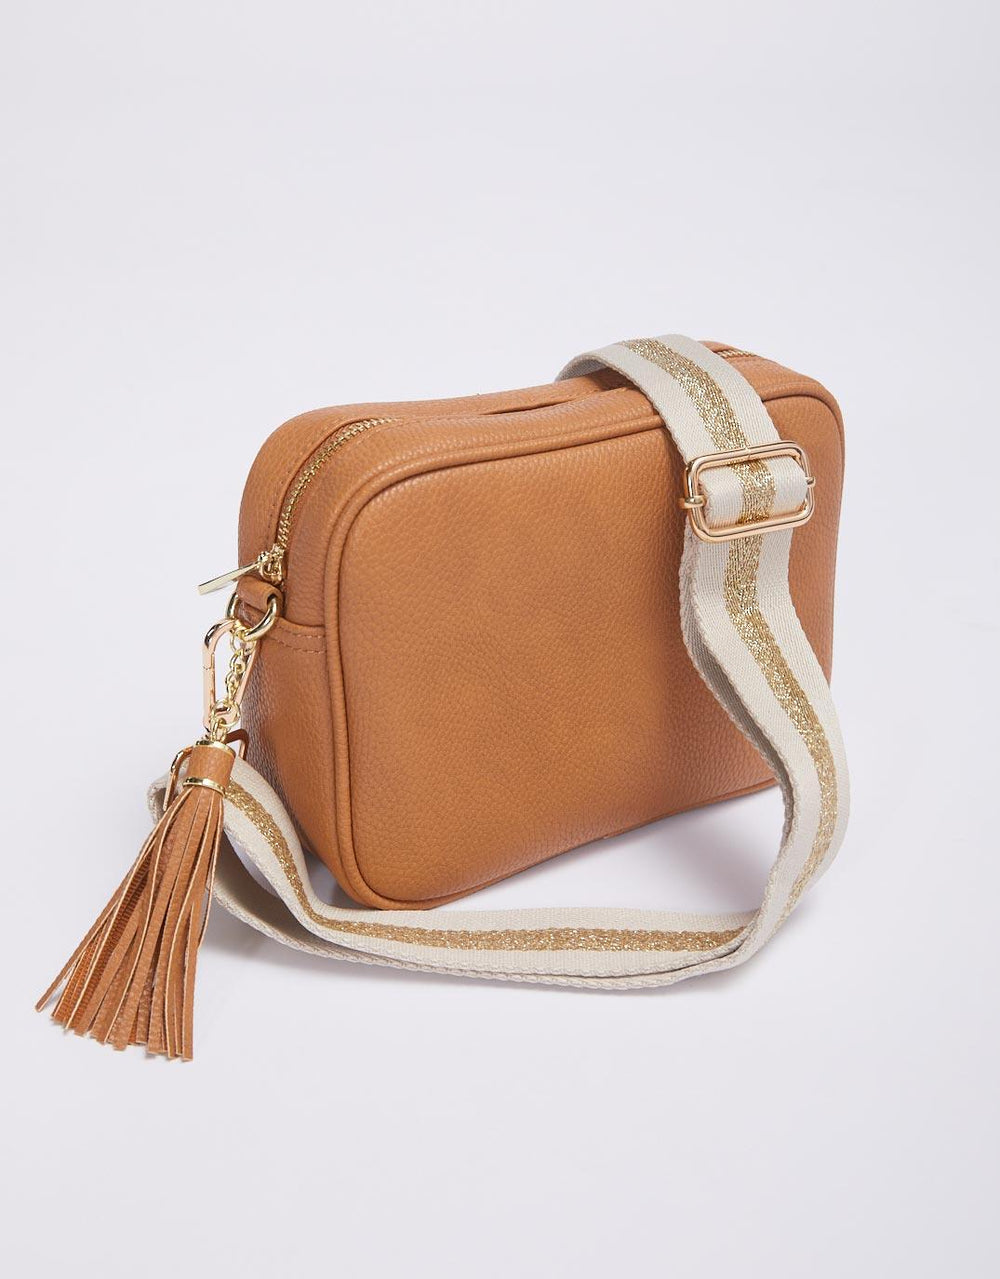 White & Co. - Bag Strap Stripe - Natural/Gold Lurex - White & Co Living Accessories